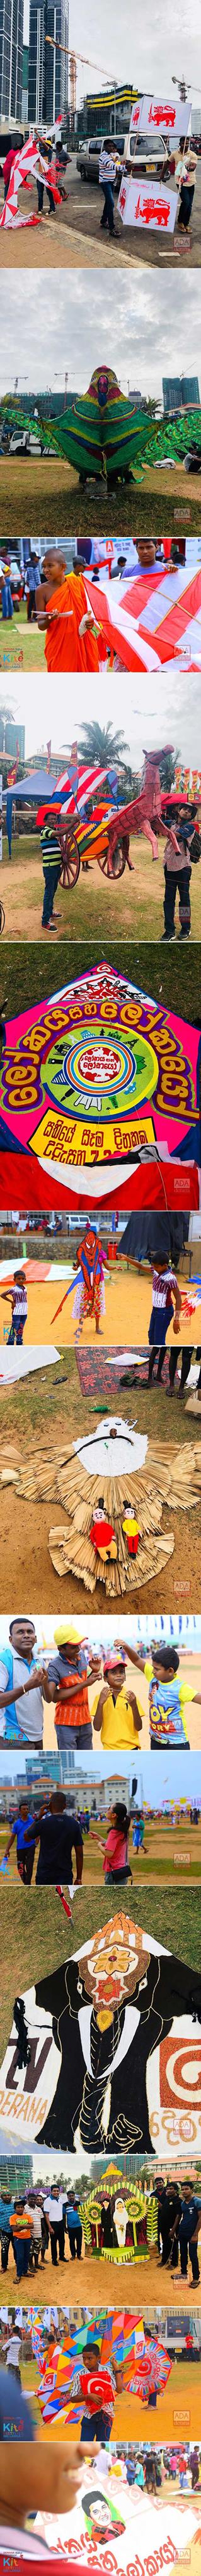 Derana International Kite Festival commences today